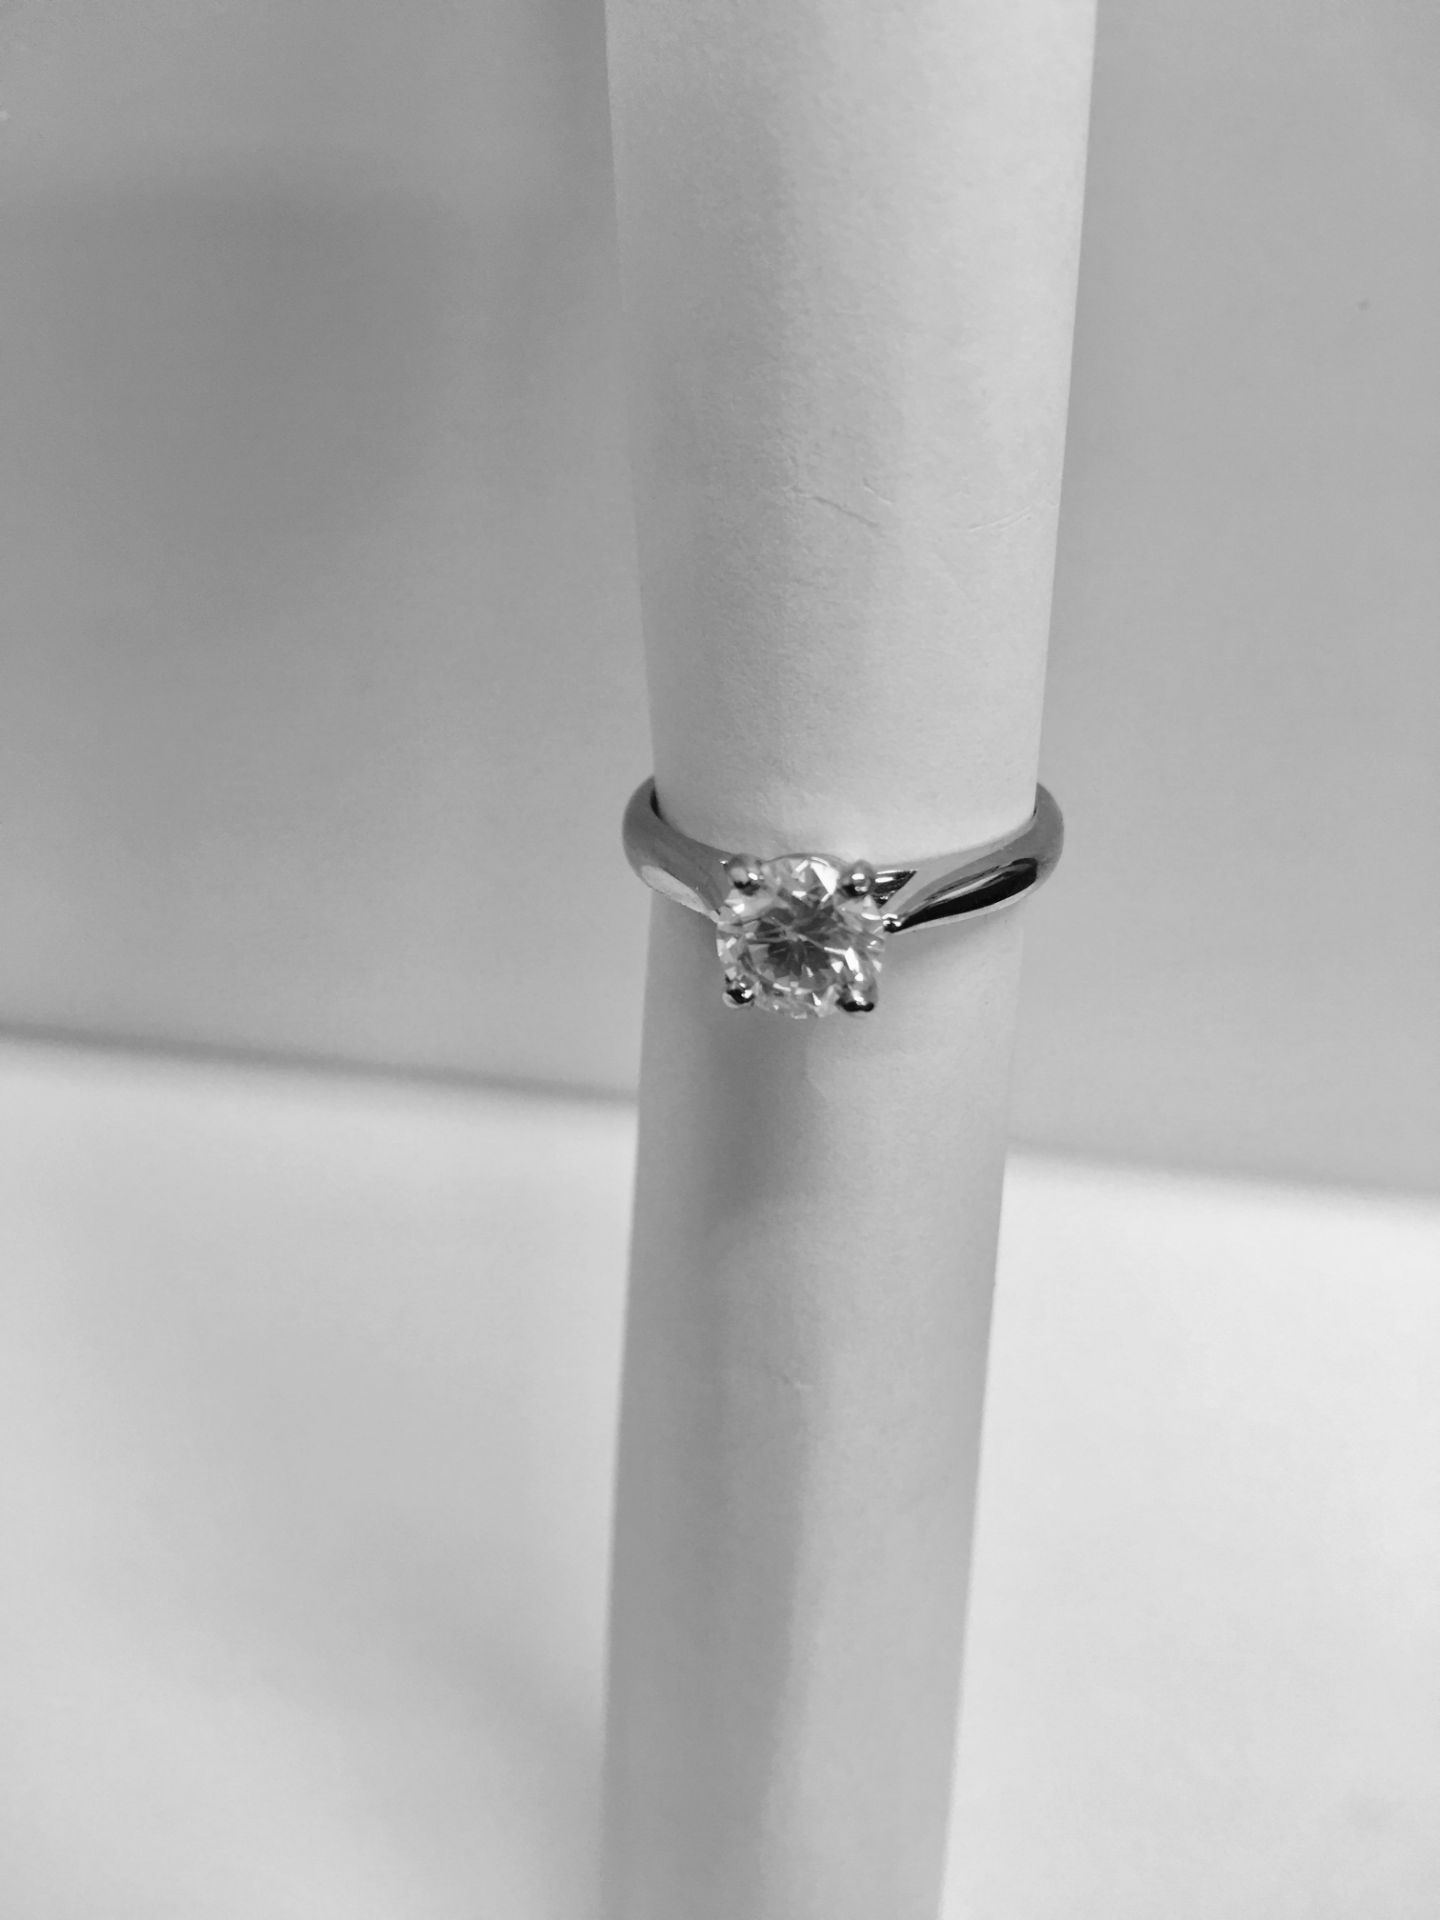 Platinum diamond solitaire ring 4 claw,0.50ct brilliant cut diamond D colour vs clarity,4.2gms - Image 4 of 8